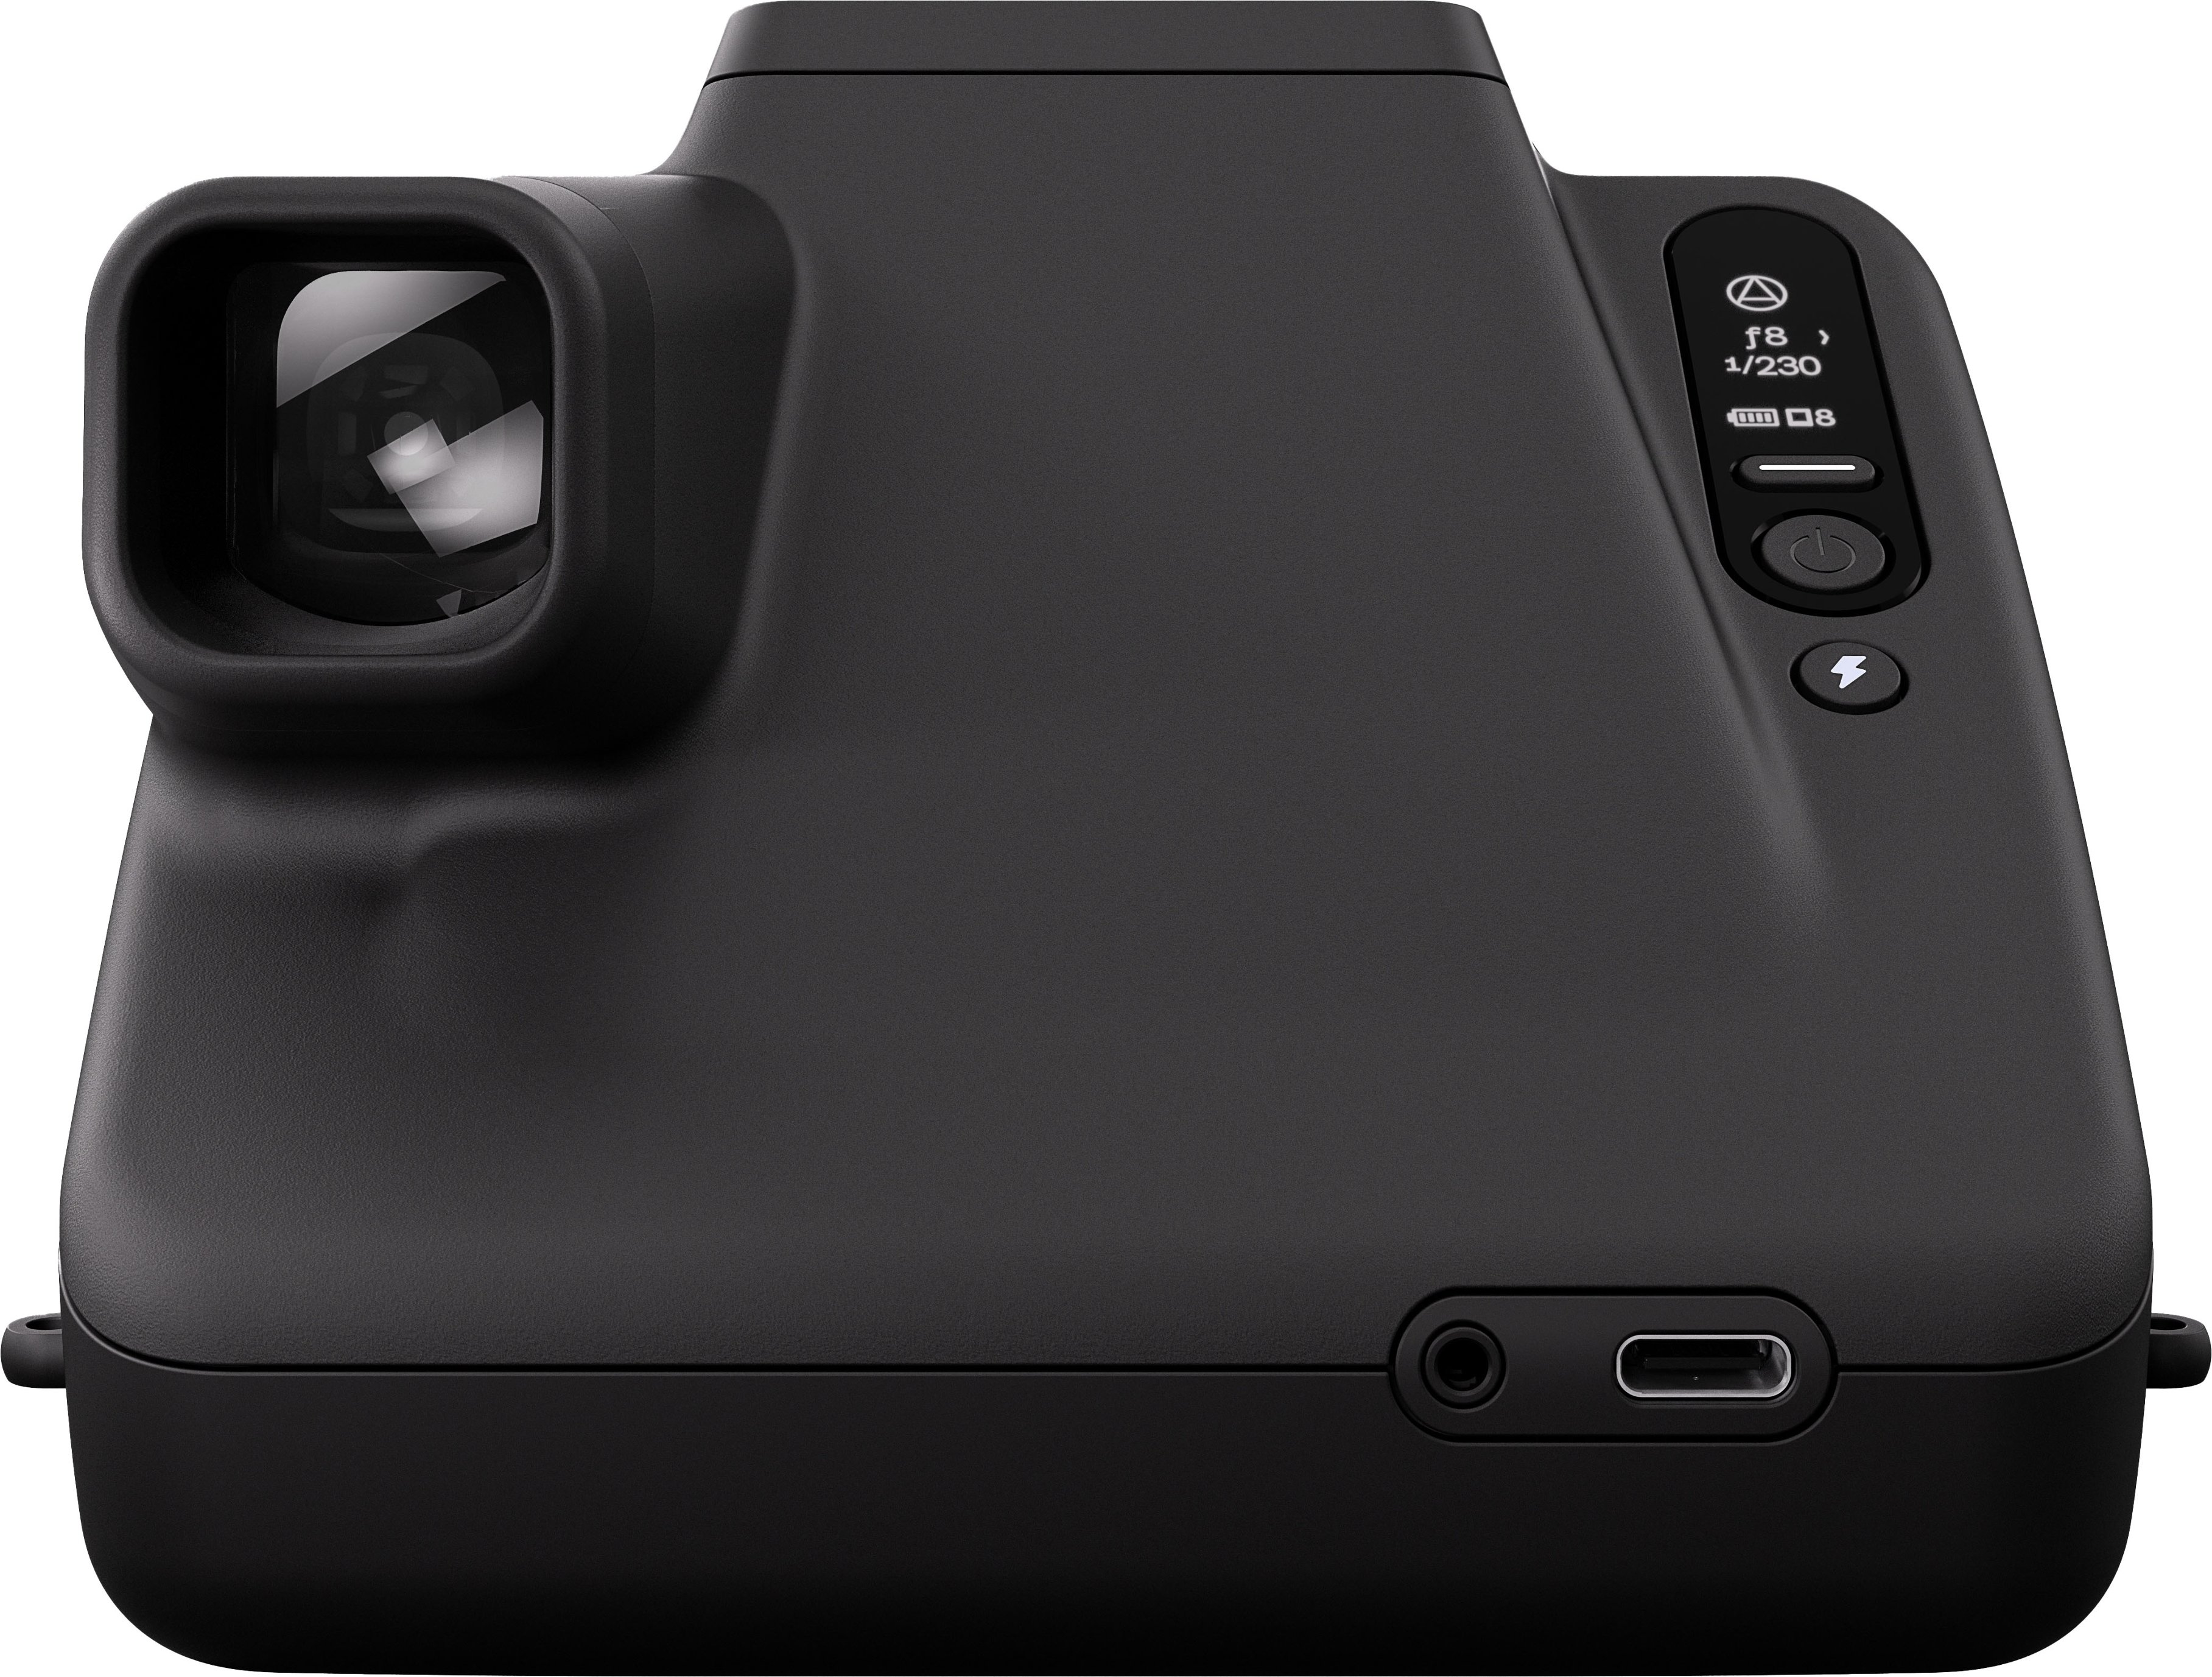 Polaroid Go Instant Camera (Black) - 9070-POLAROID